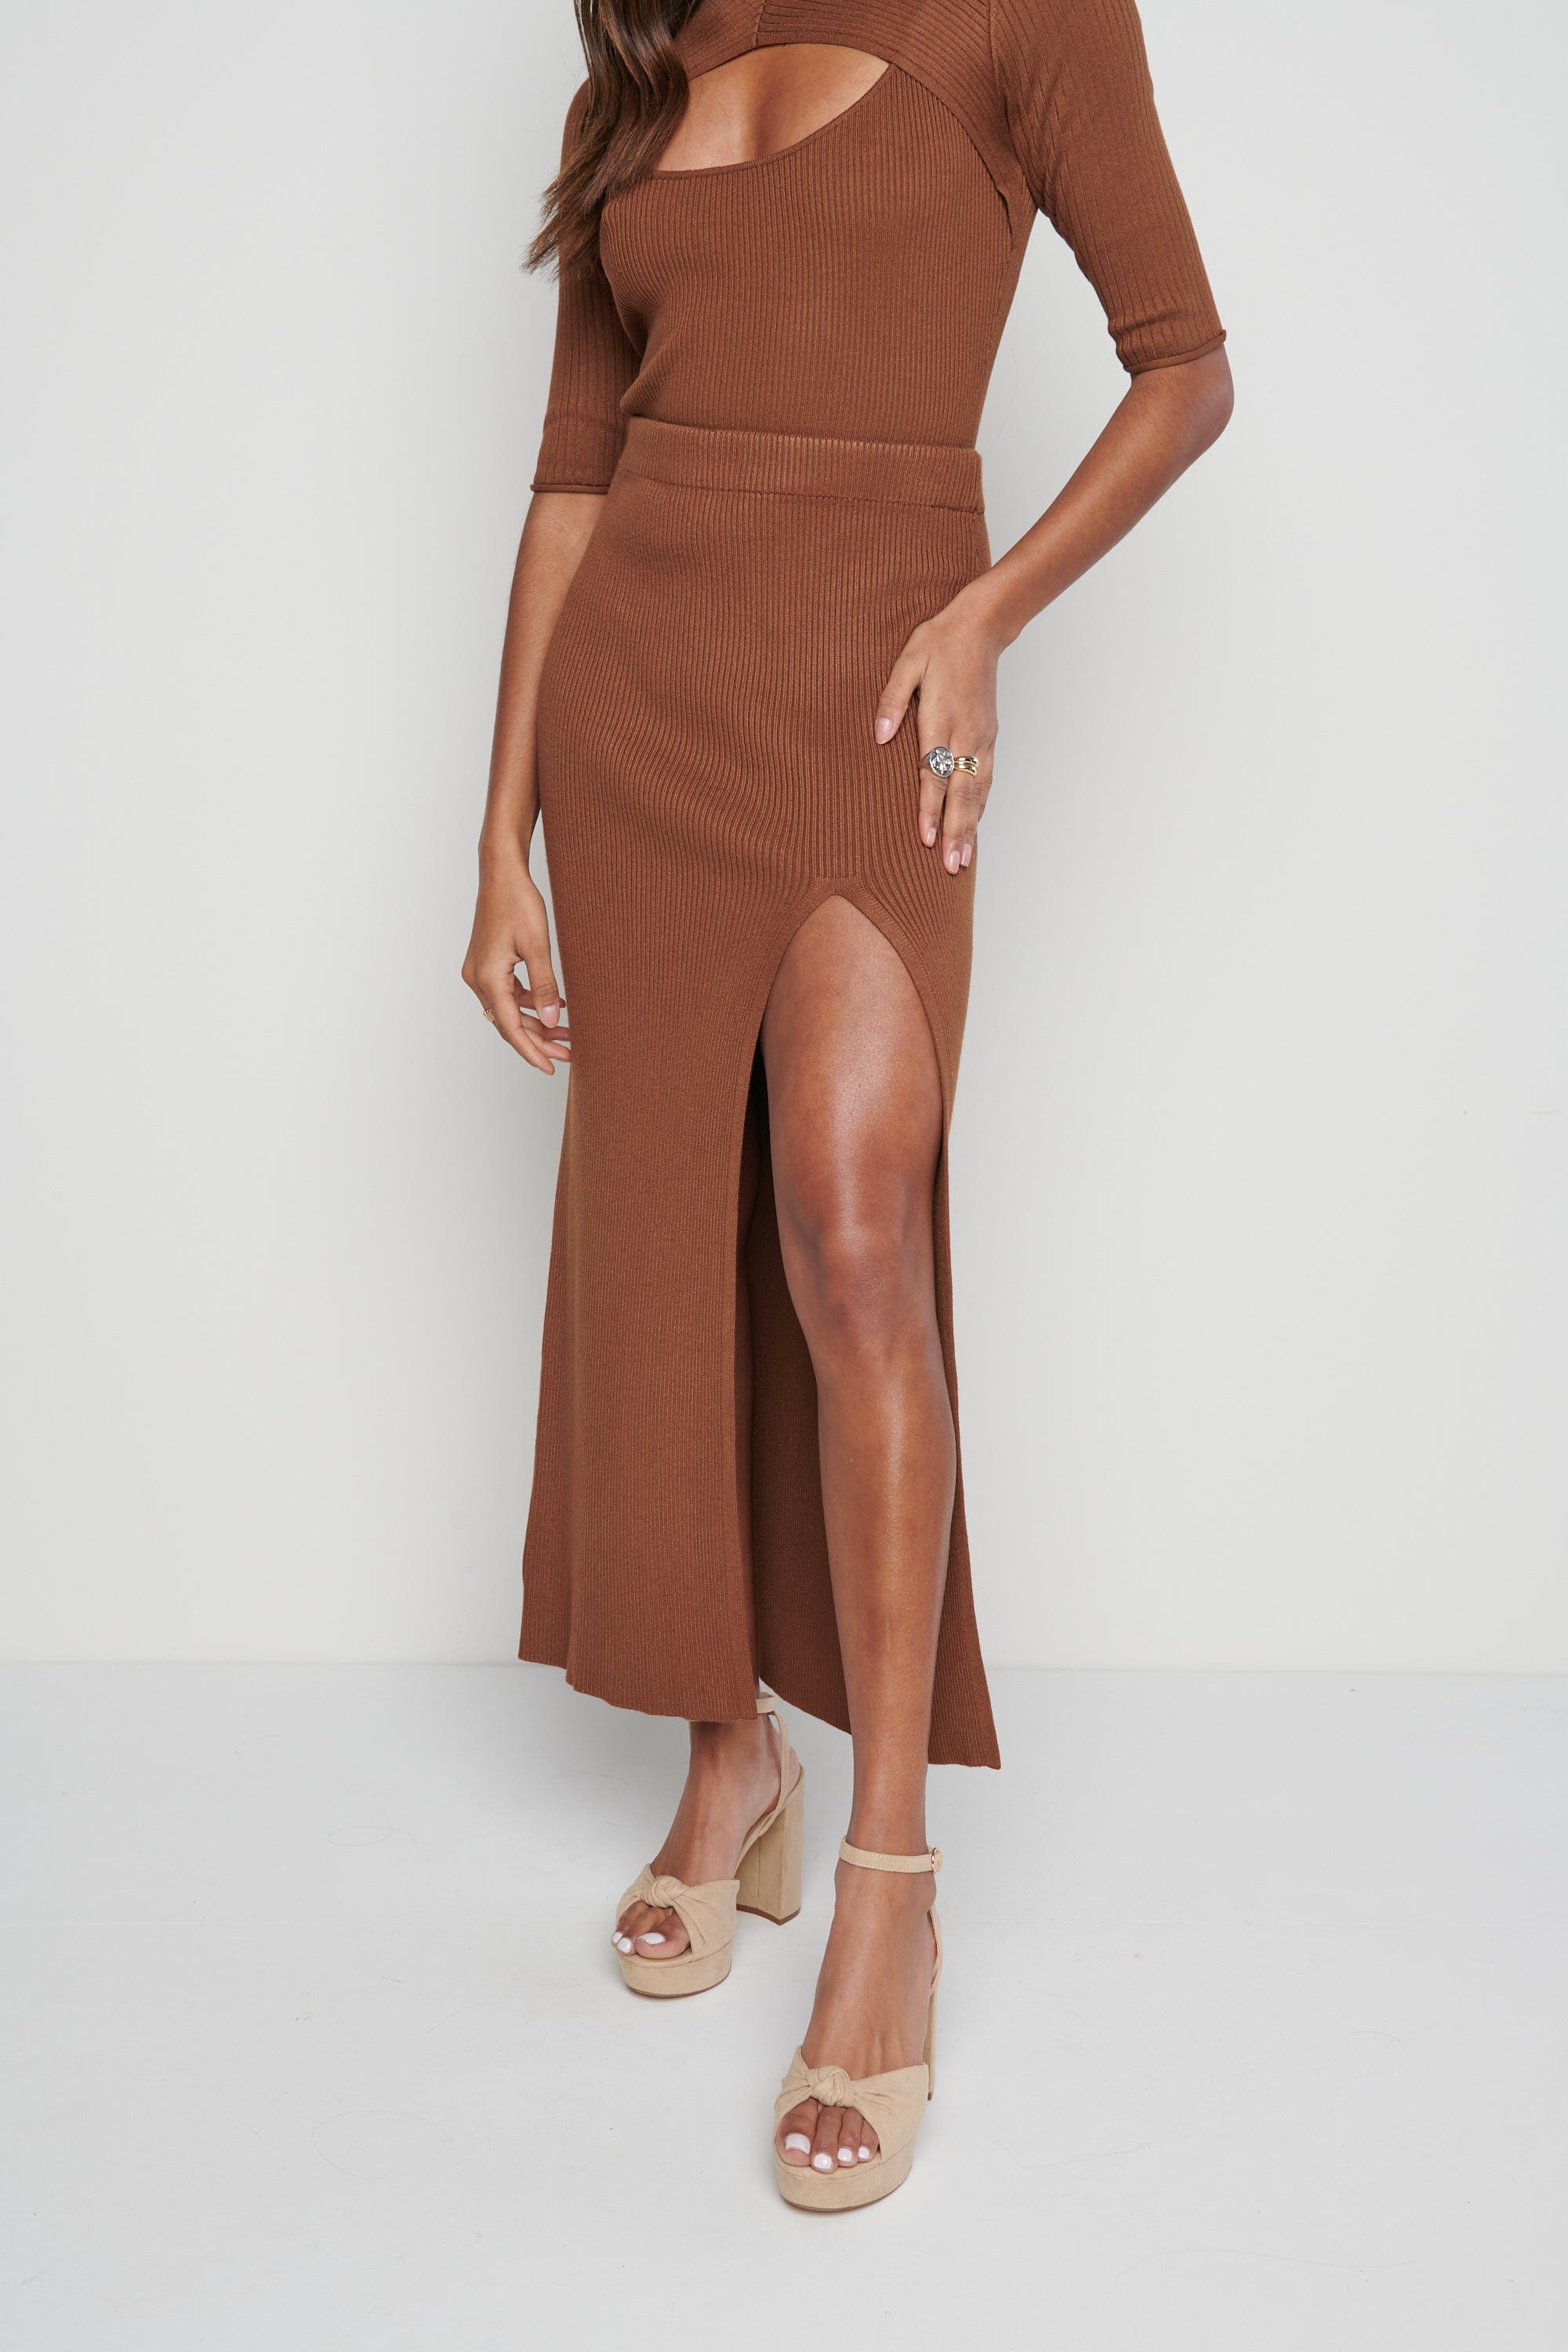 Serena Knit Skirt - Brown, M